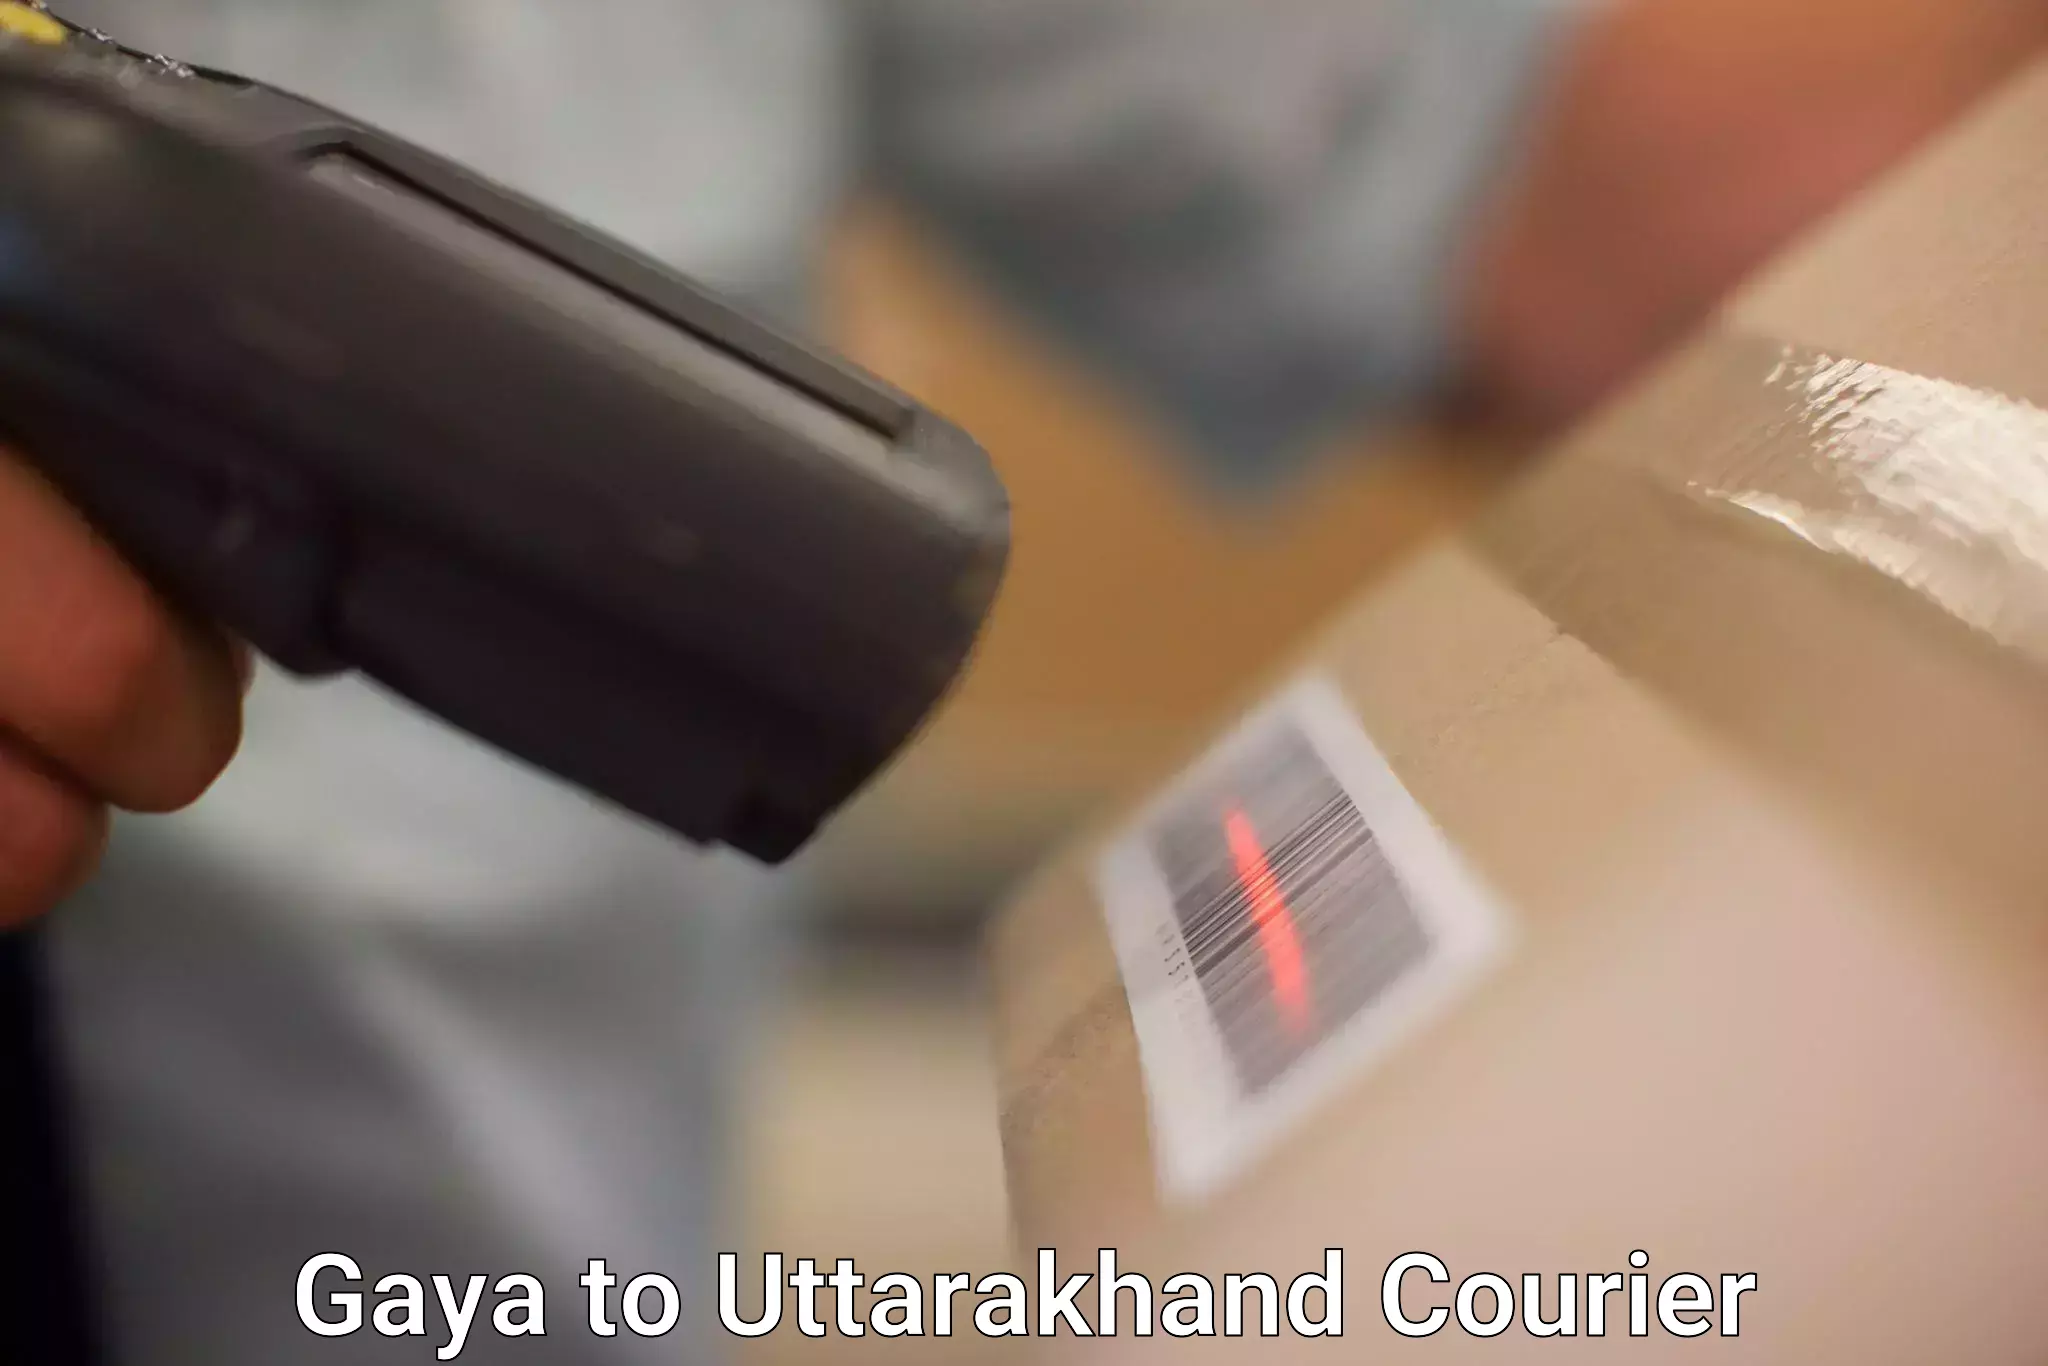 Cash on delivery service Gaya to Uttarakhand